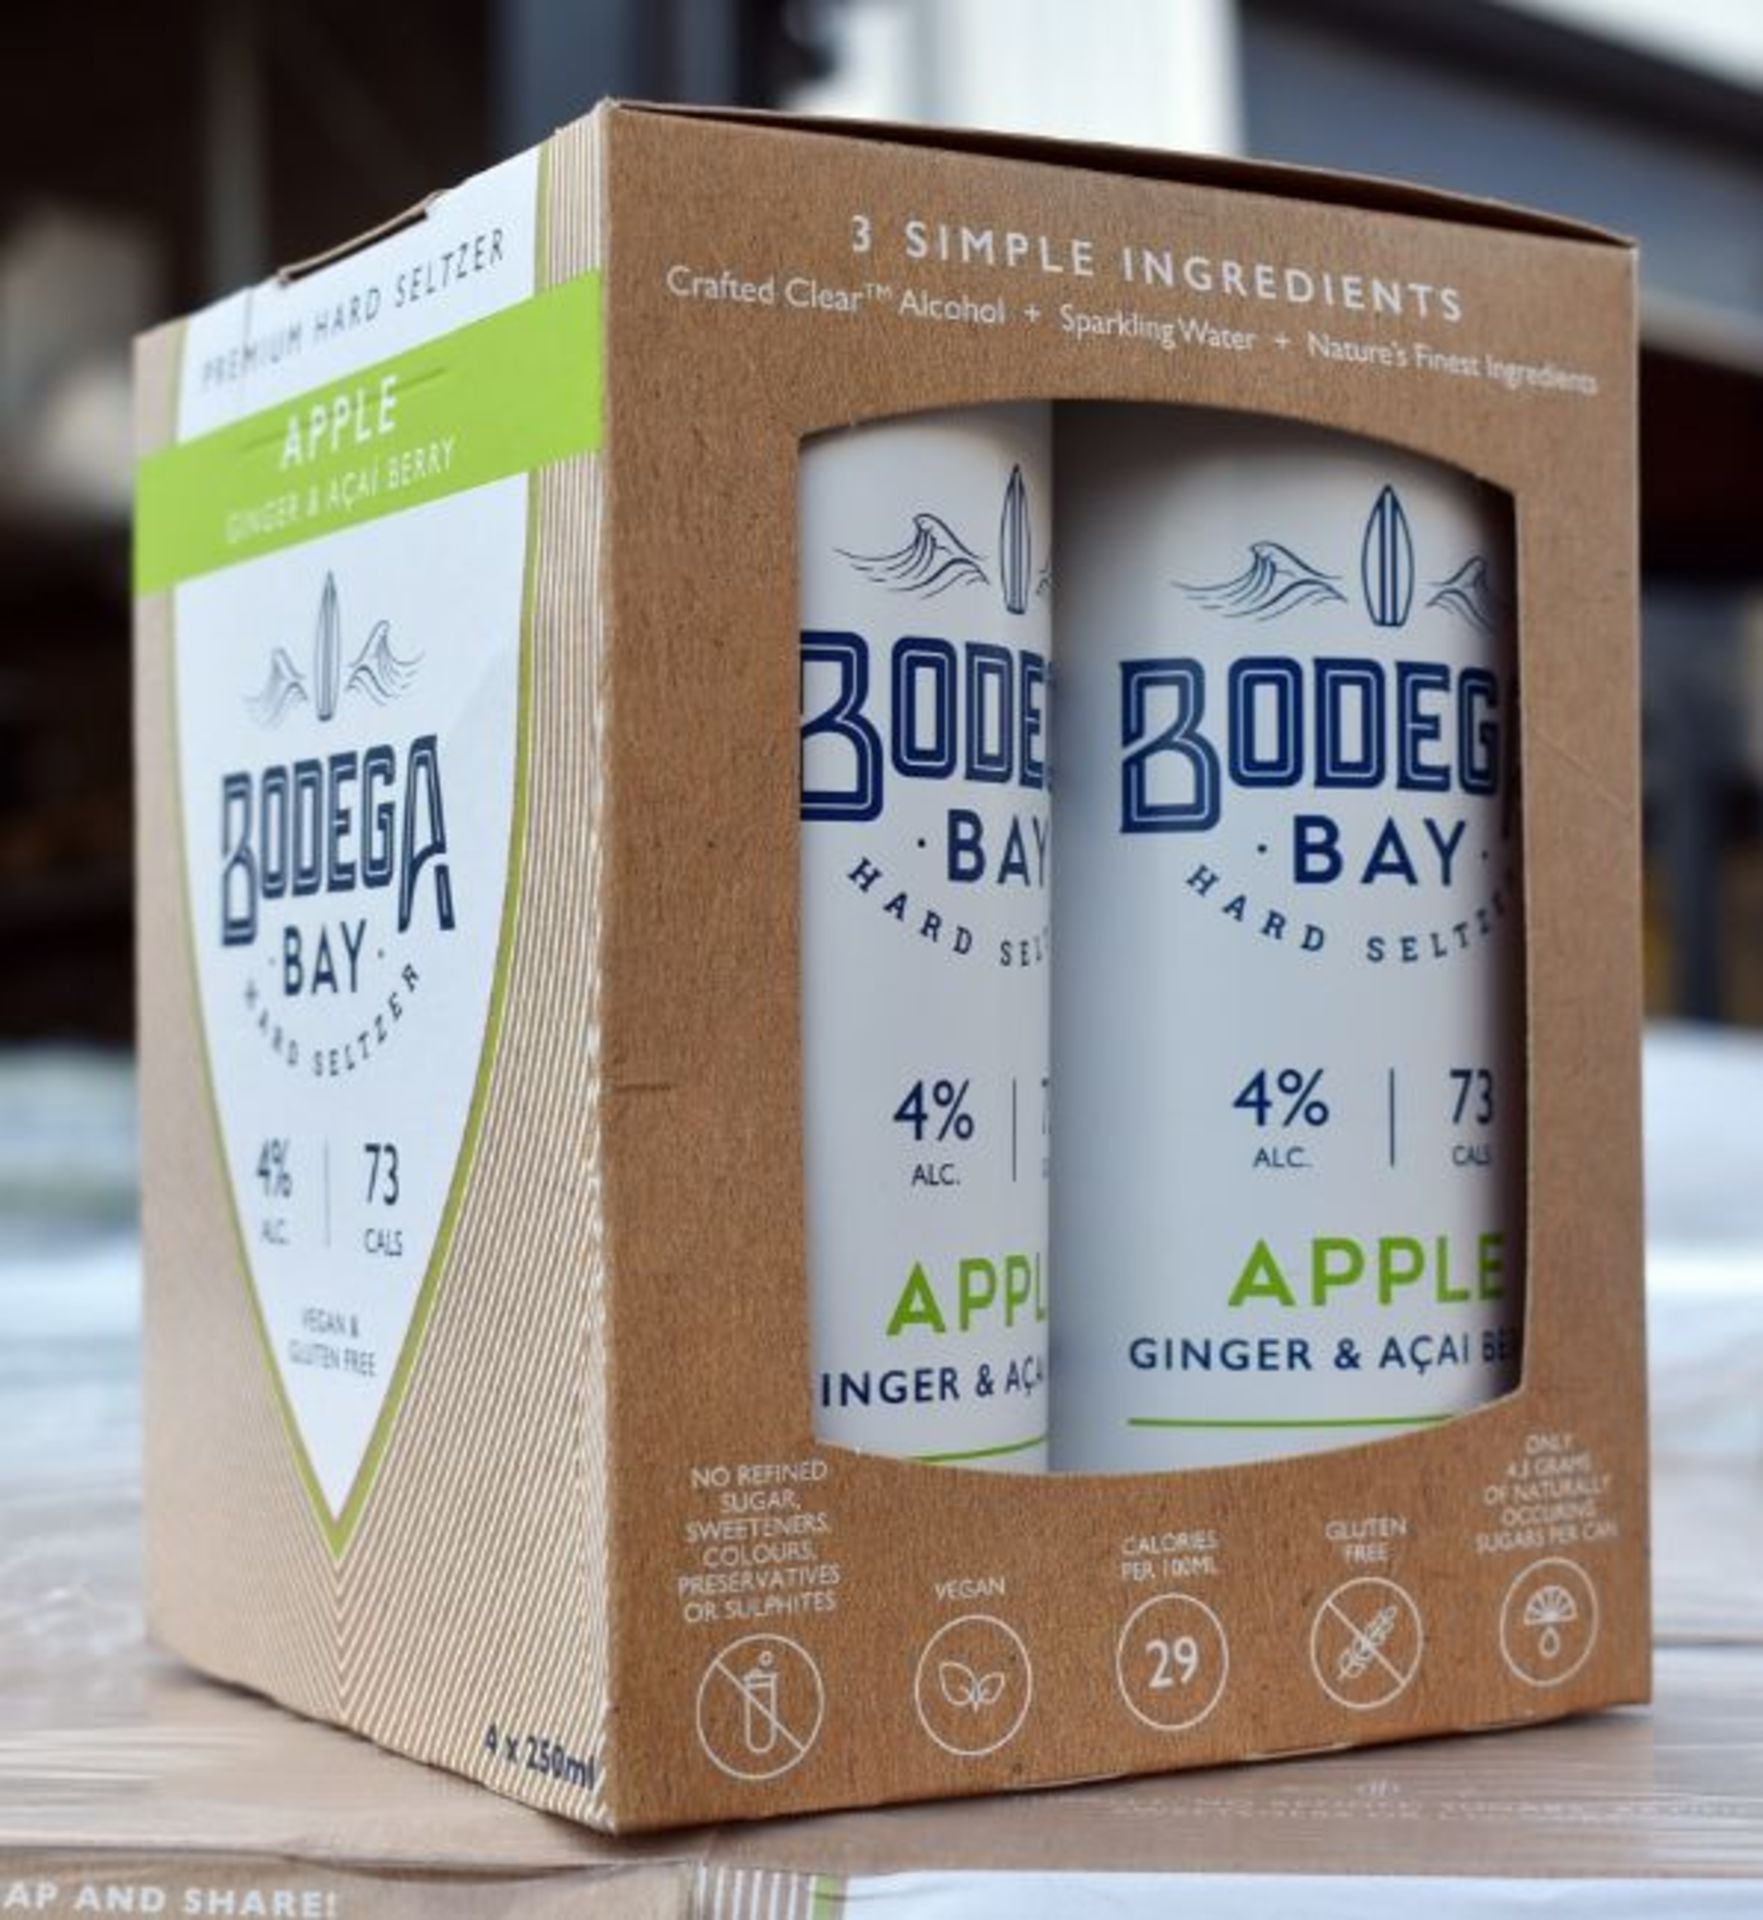 24 x Bodega Bay Hard Seltzer 250ml Alcoholic Sparkling Water Drinks - Apple Ginger & Acai Berry - Image 2 of 9